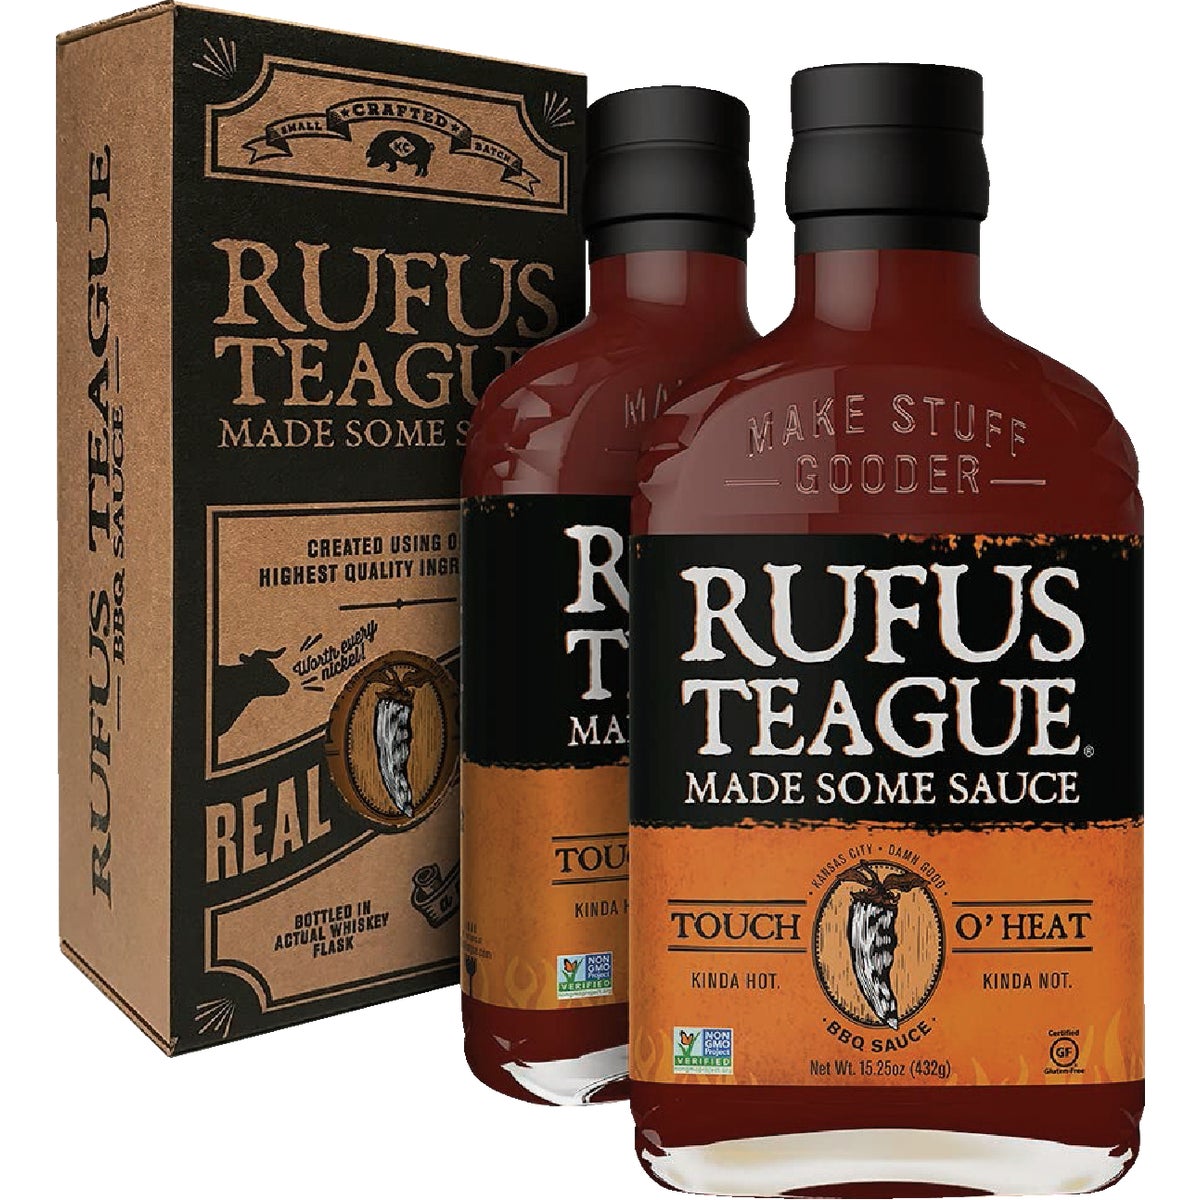 Rufus Teague Touch O' Heat 15.25 Oz. BBQ Sauce